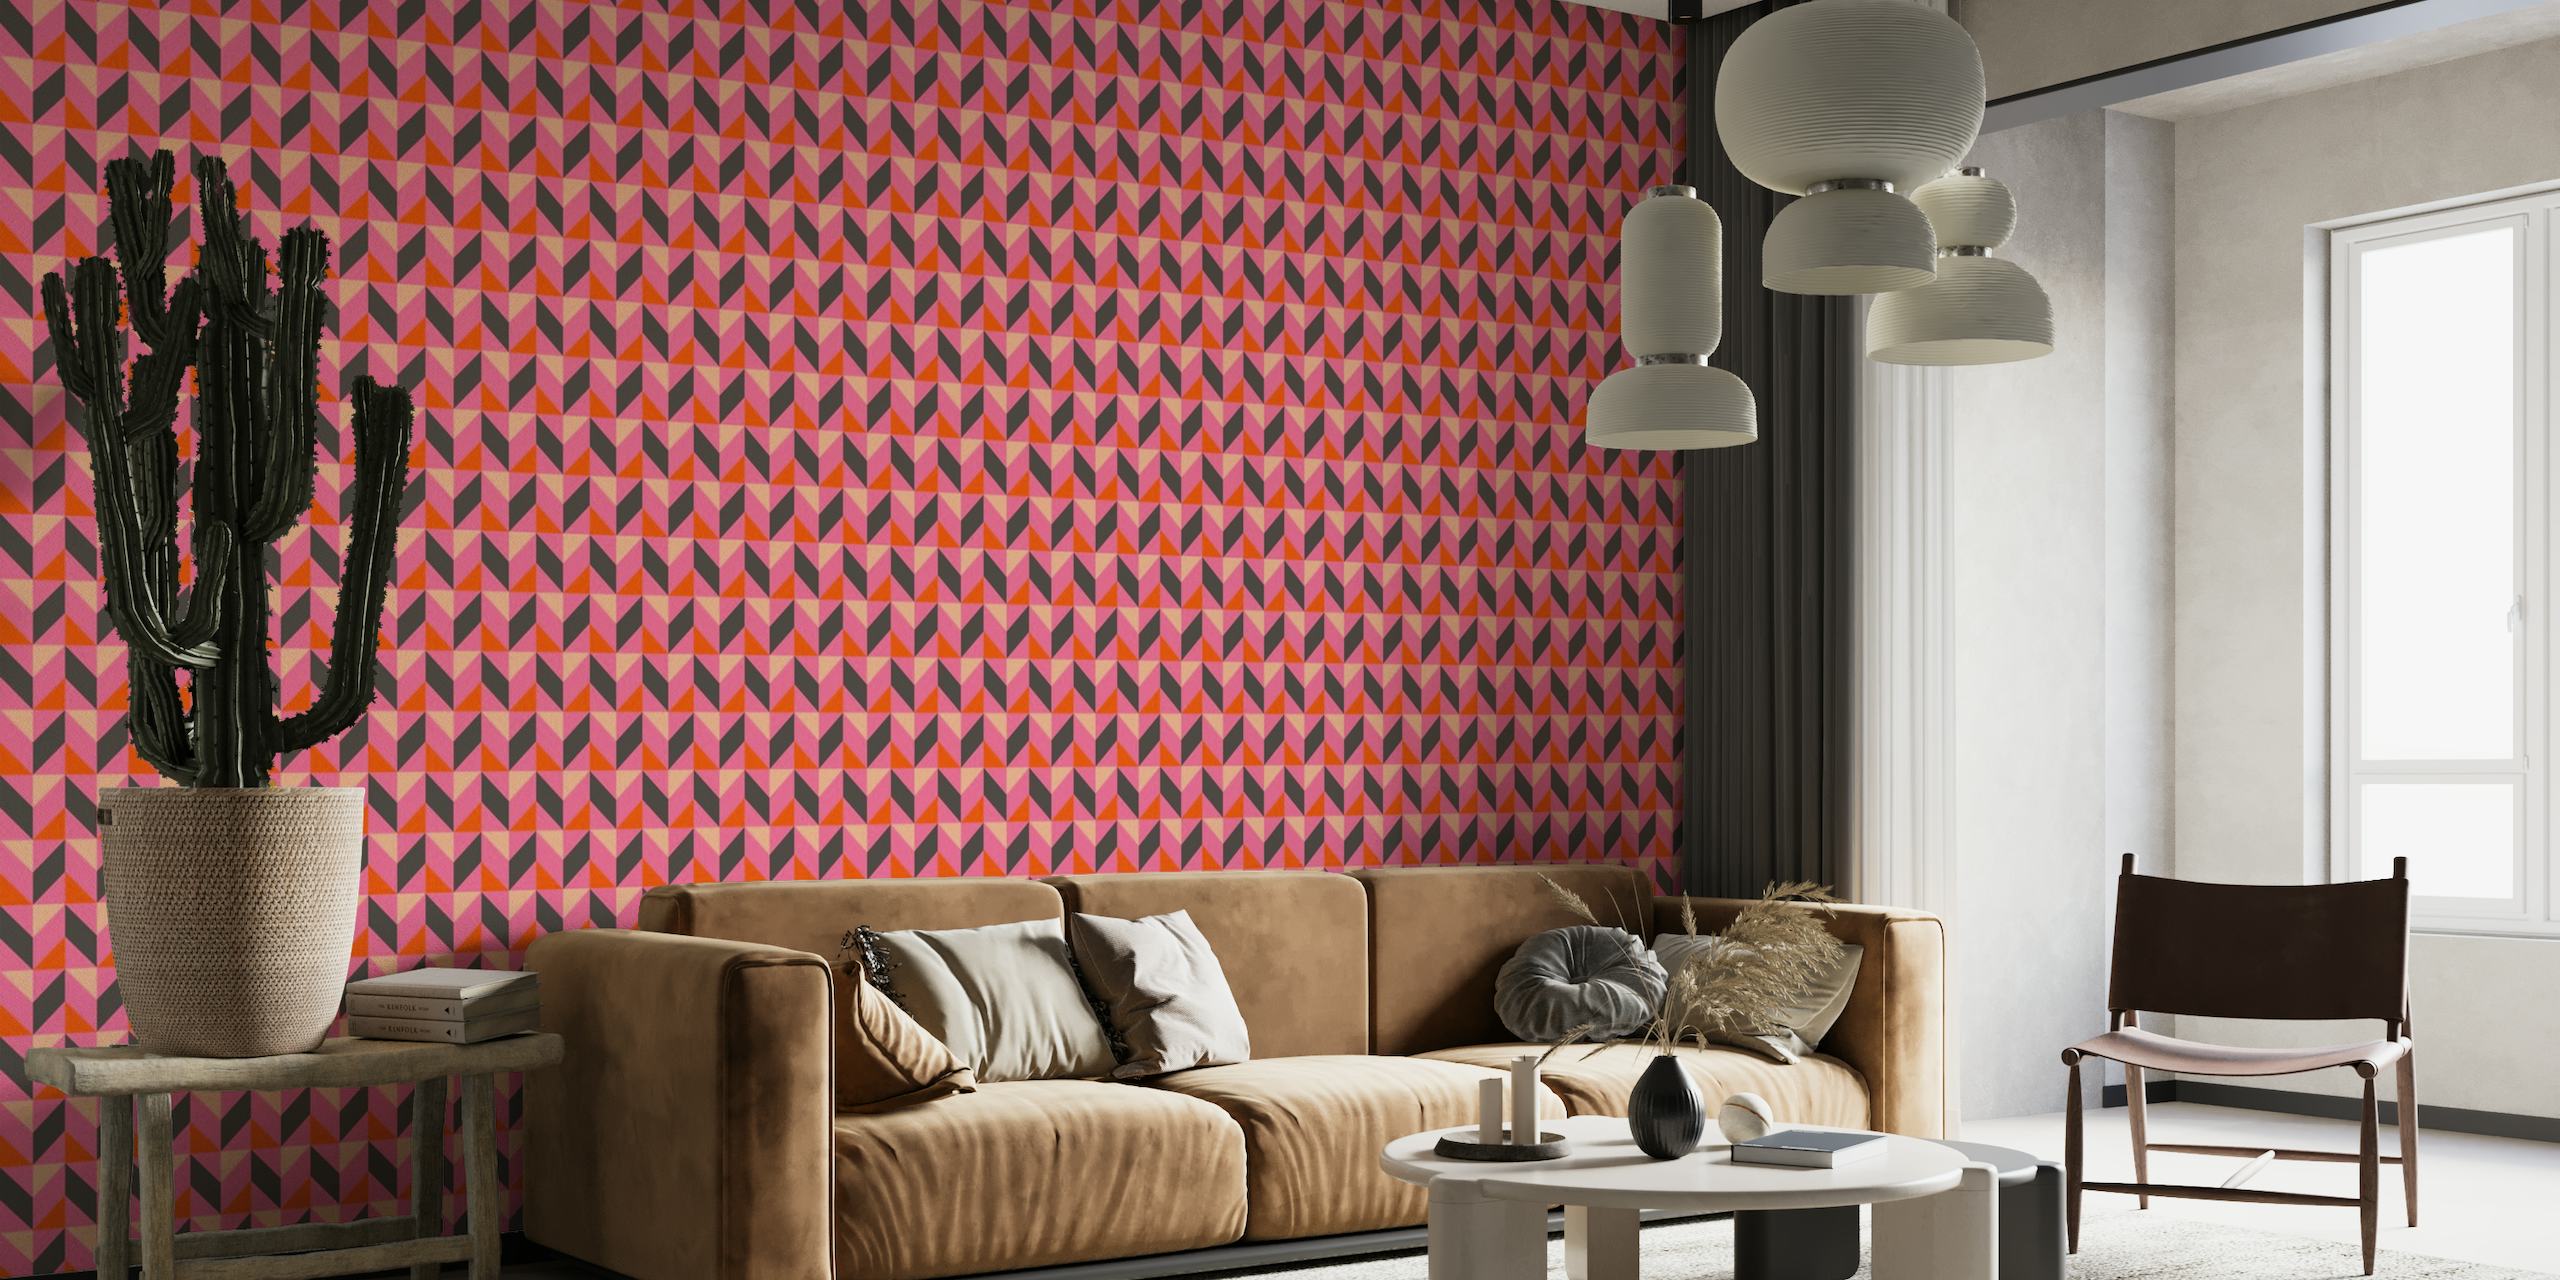 Bold Geometric Pattern in Hot Pink and Orange wallpaper